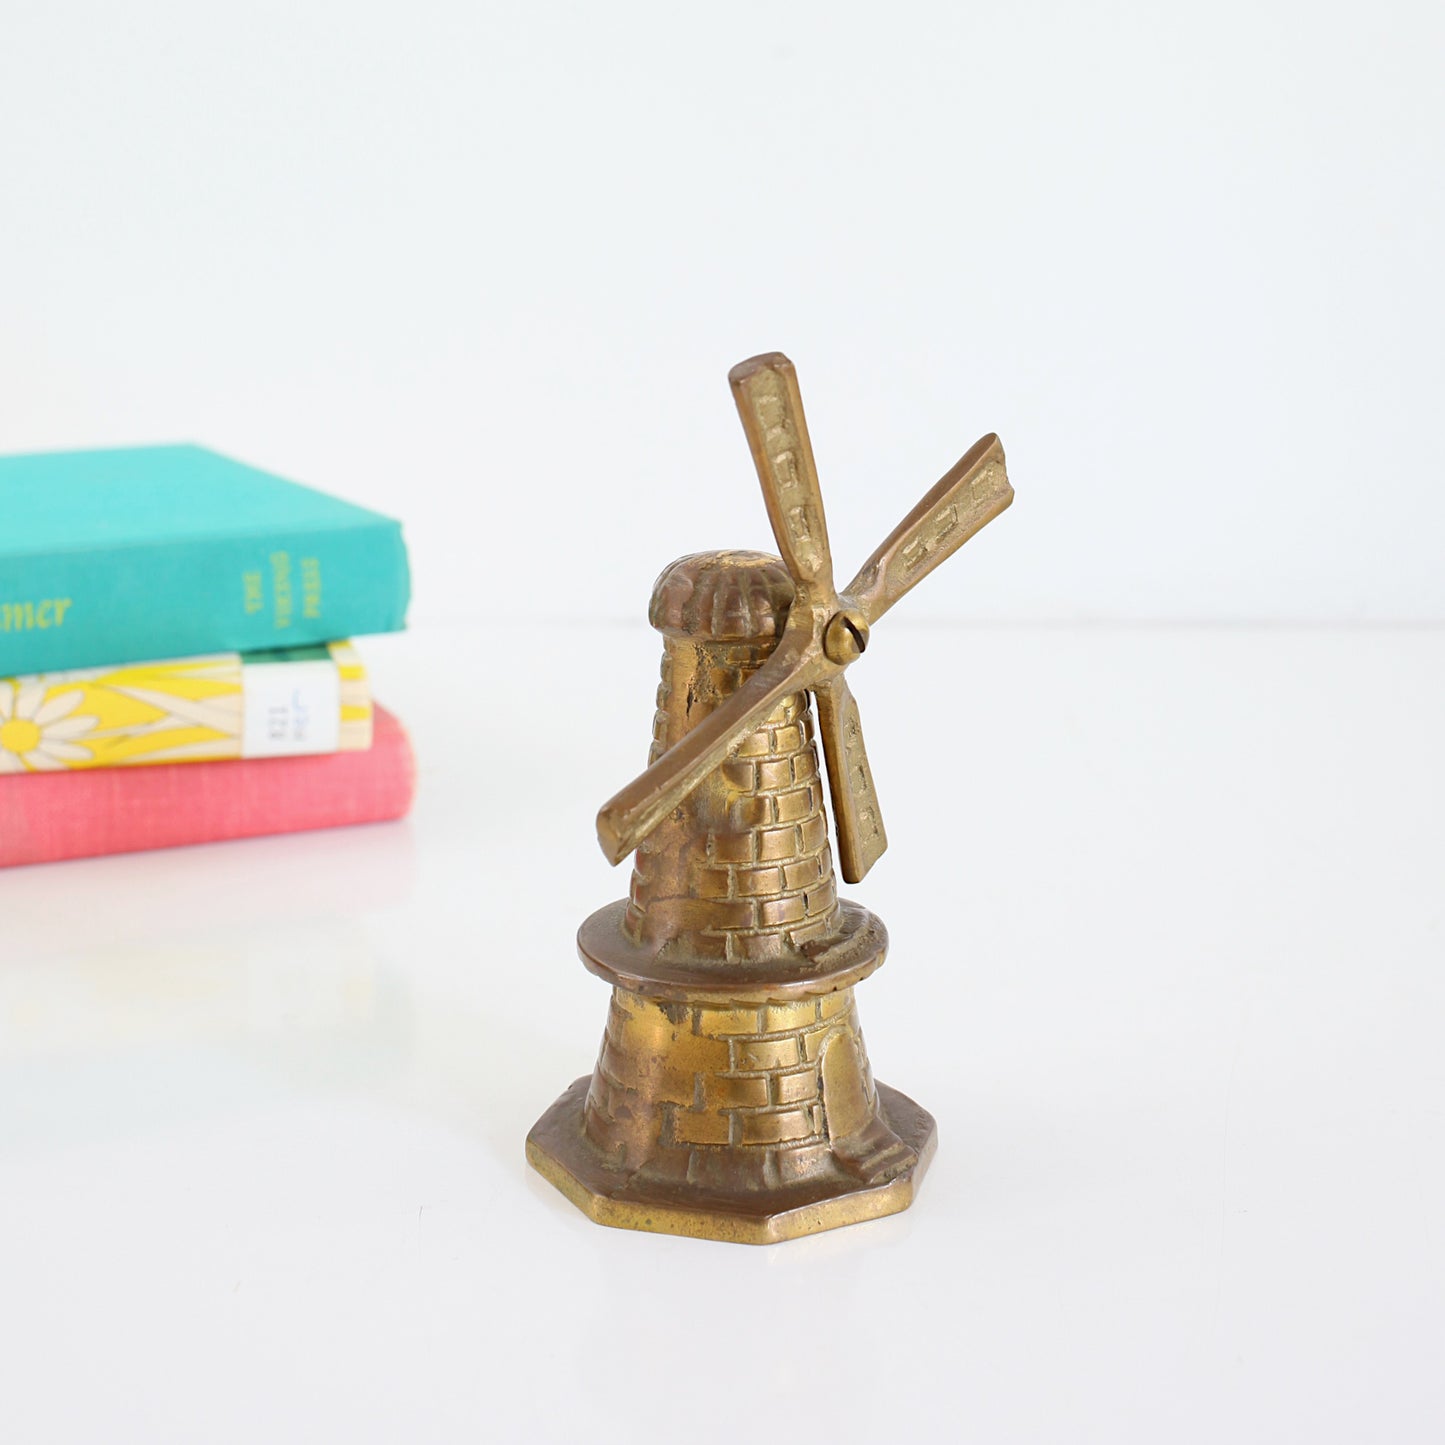 SOLD - Vintage Brass Windmill Bell